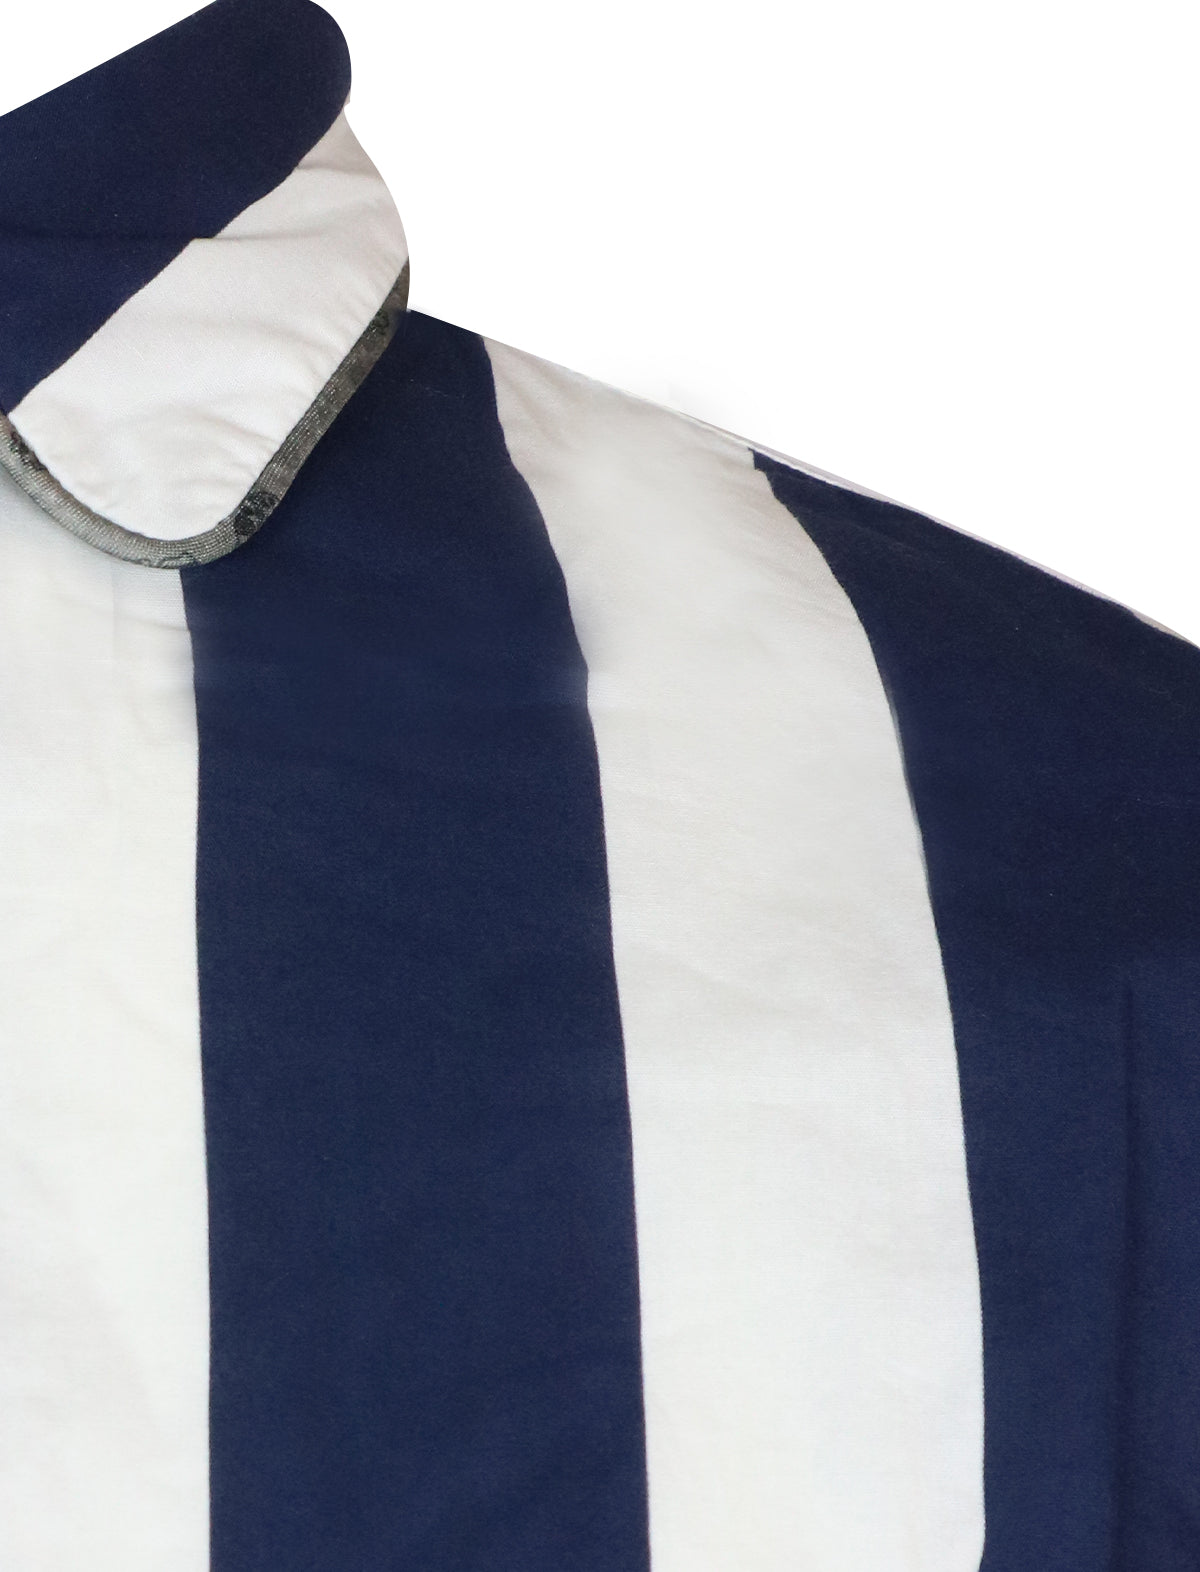 Gabriele Pasini Bold Striped Shirt in Navy/White